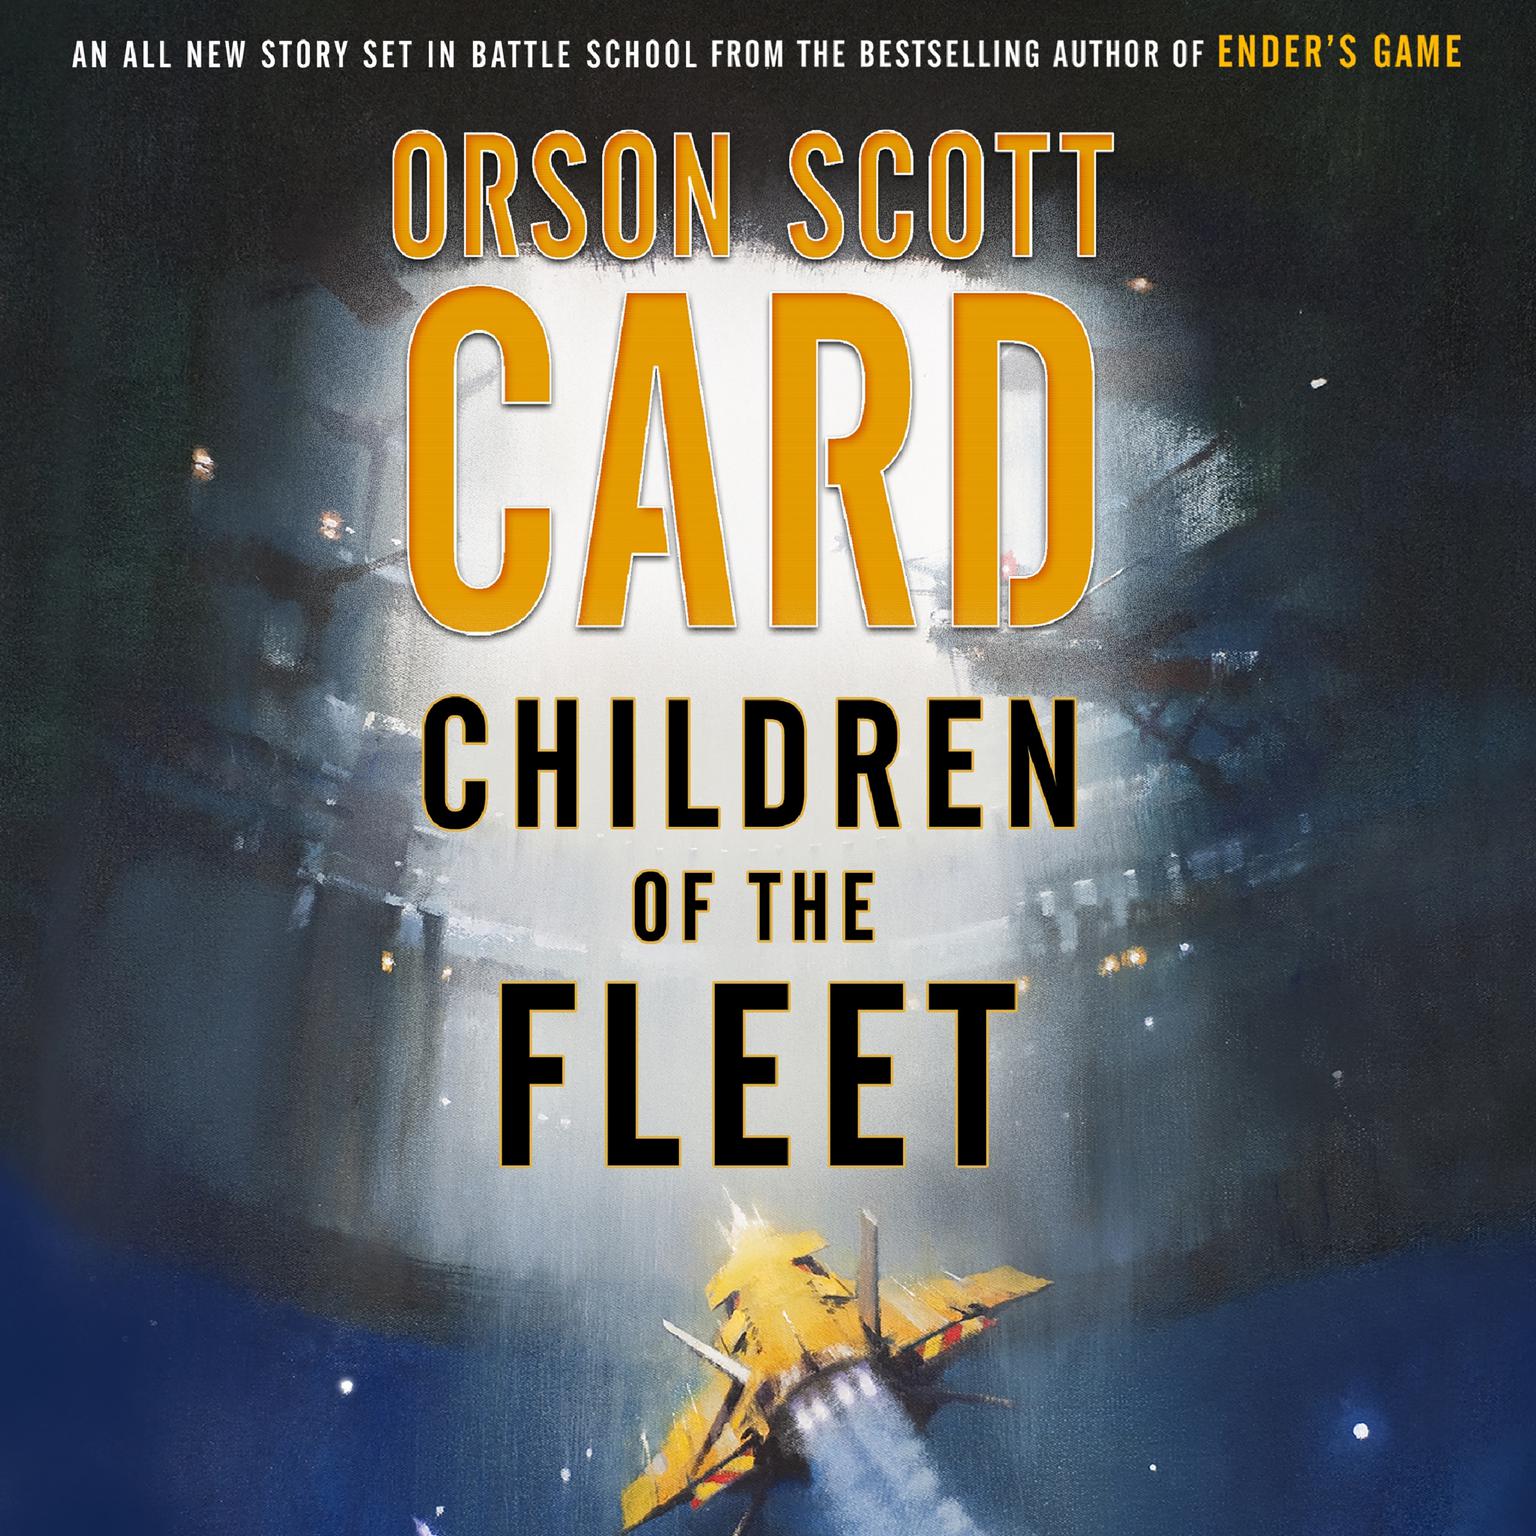 Children of the Fleet Audiobook, by Orson Scott Card